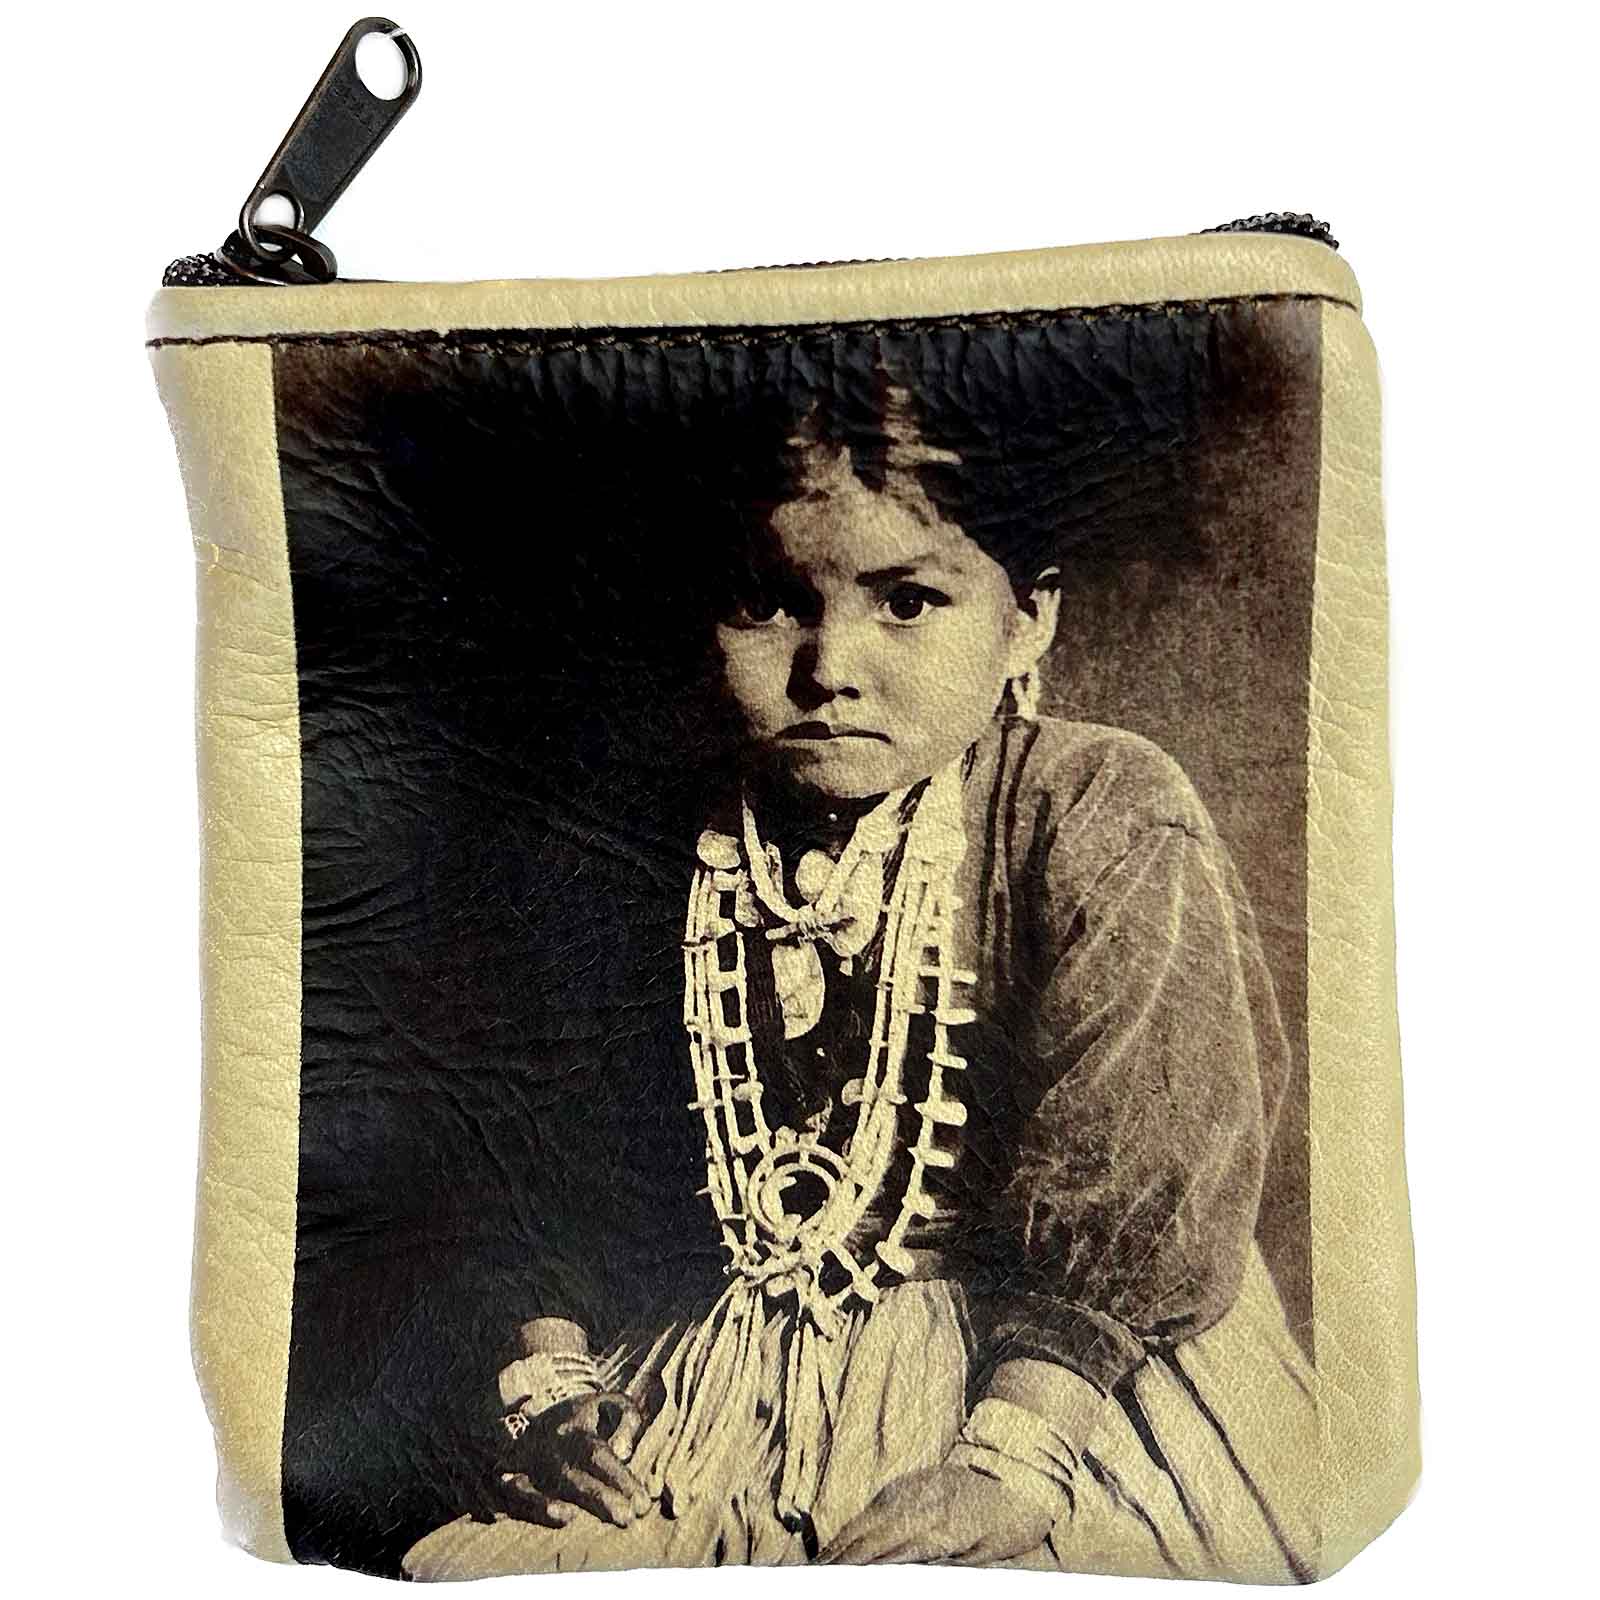 Southwest Tribal Small Canvas Coin Purse w/ Zipper - Indian Sunset Design  NEW | eBay